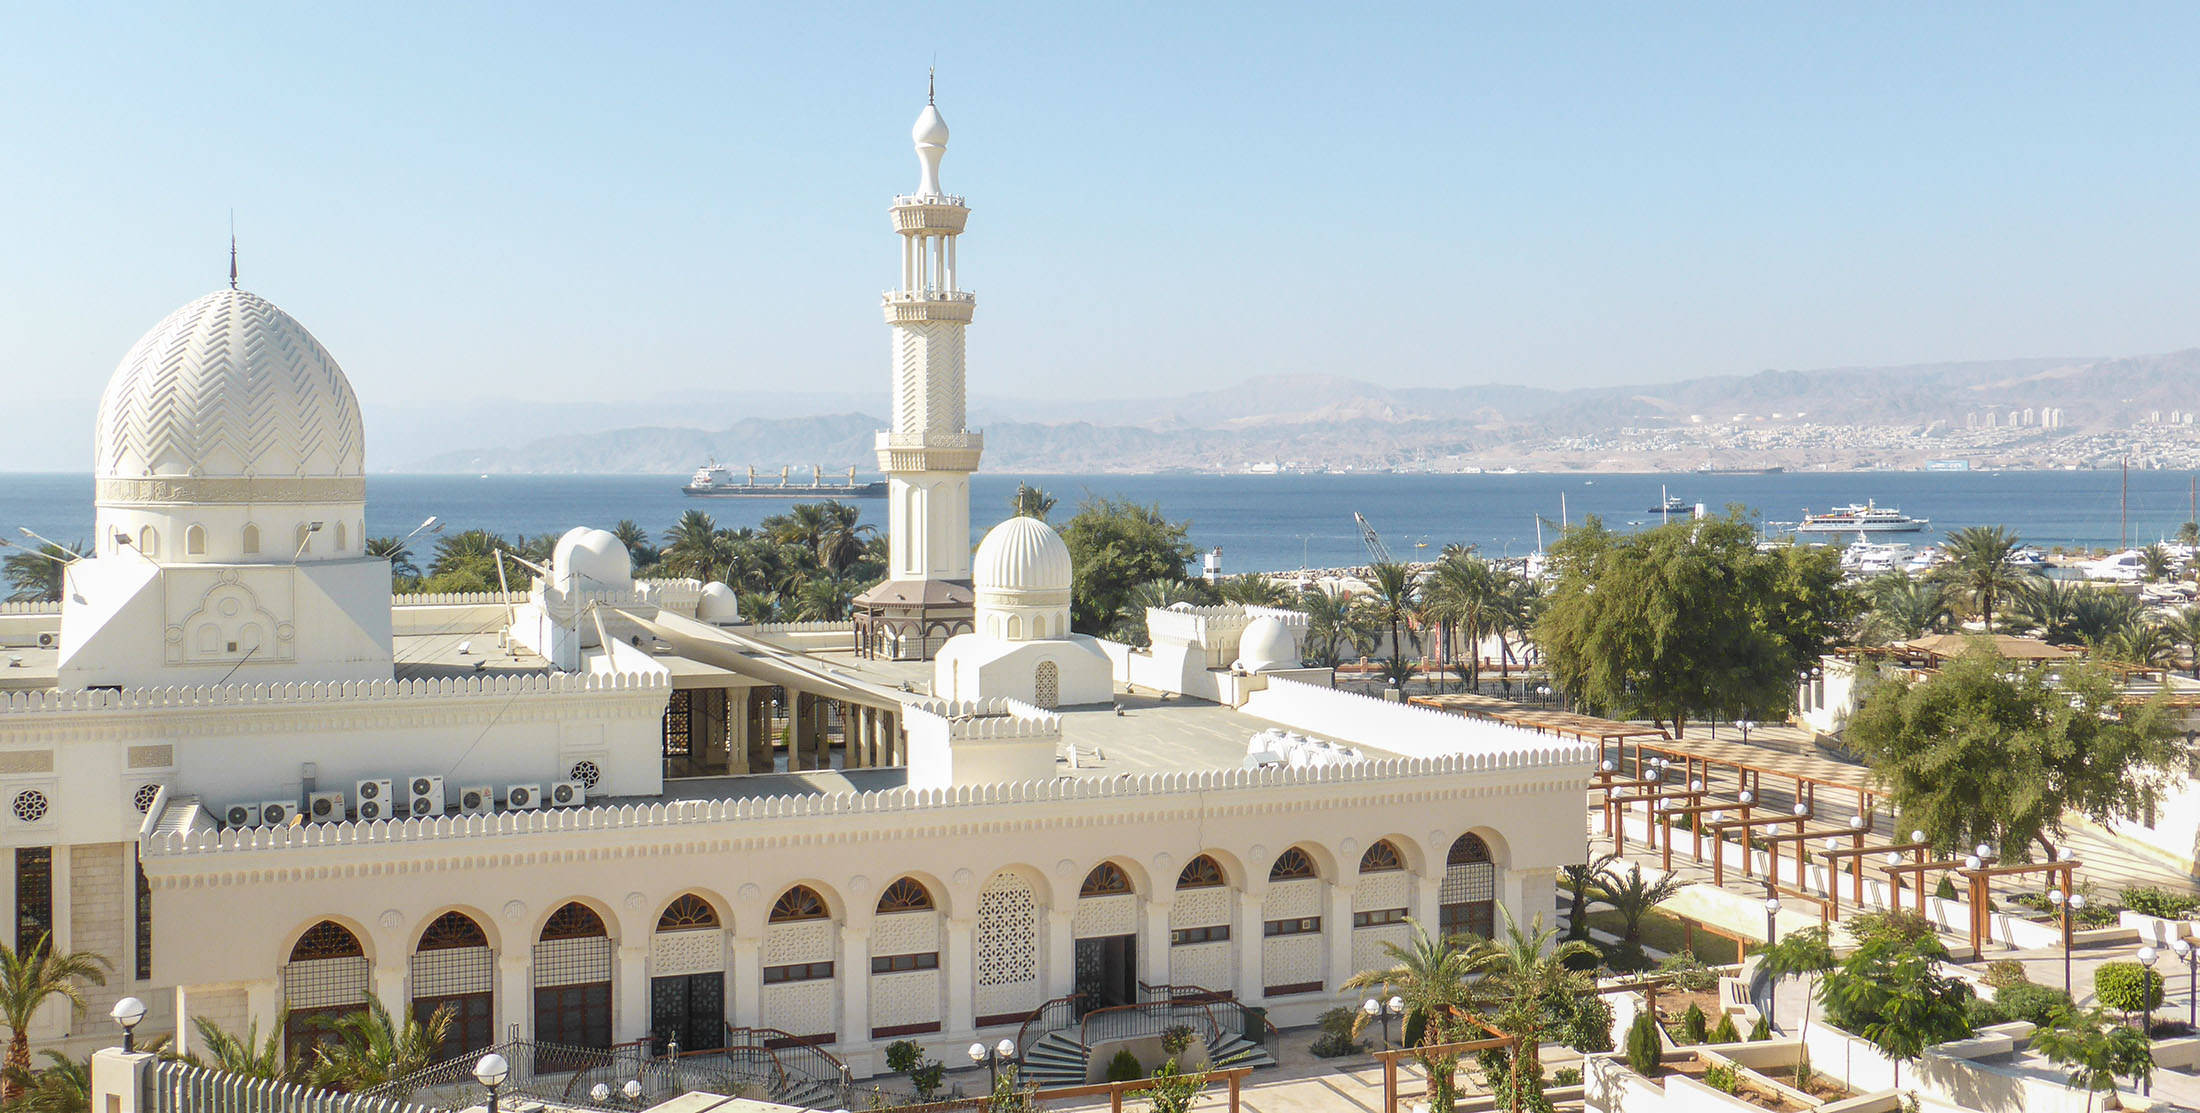 Al-Hussein Bin Ali Mosque in Aqaba Jordan